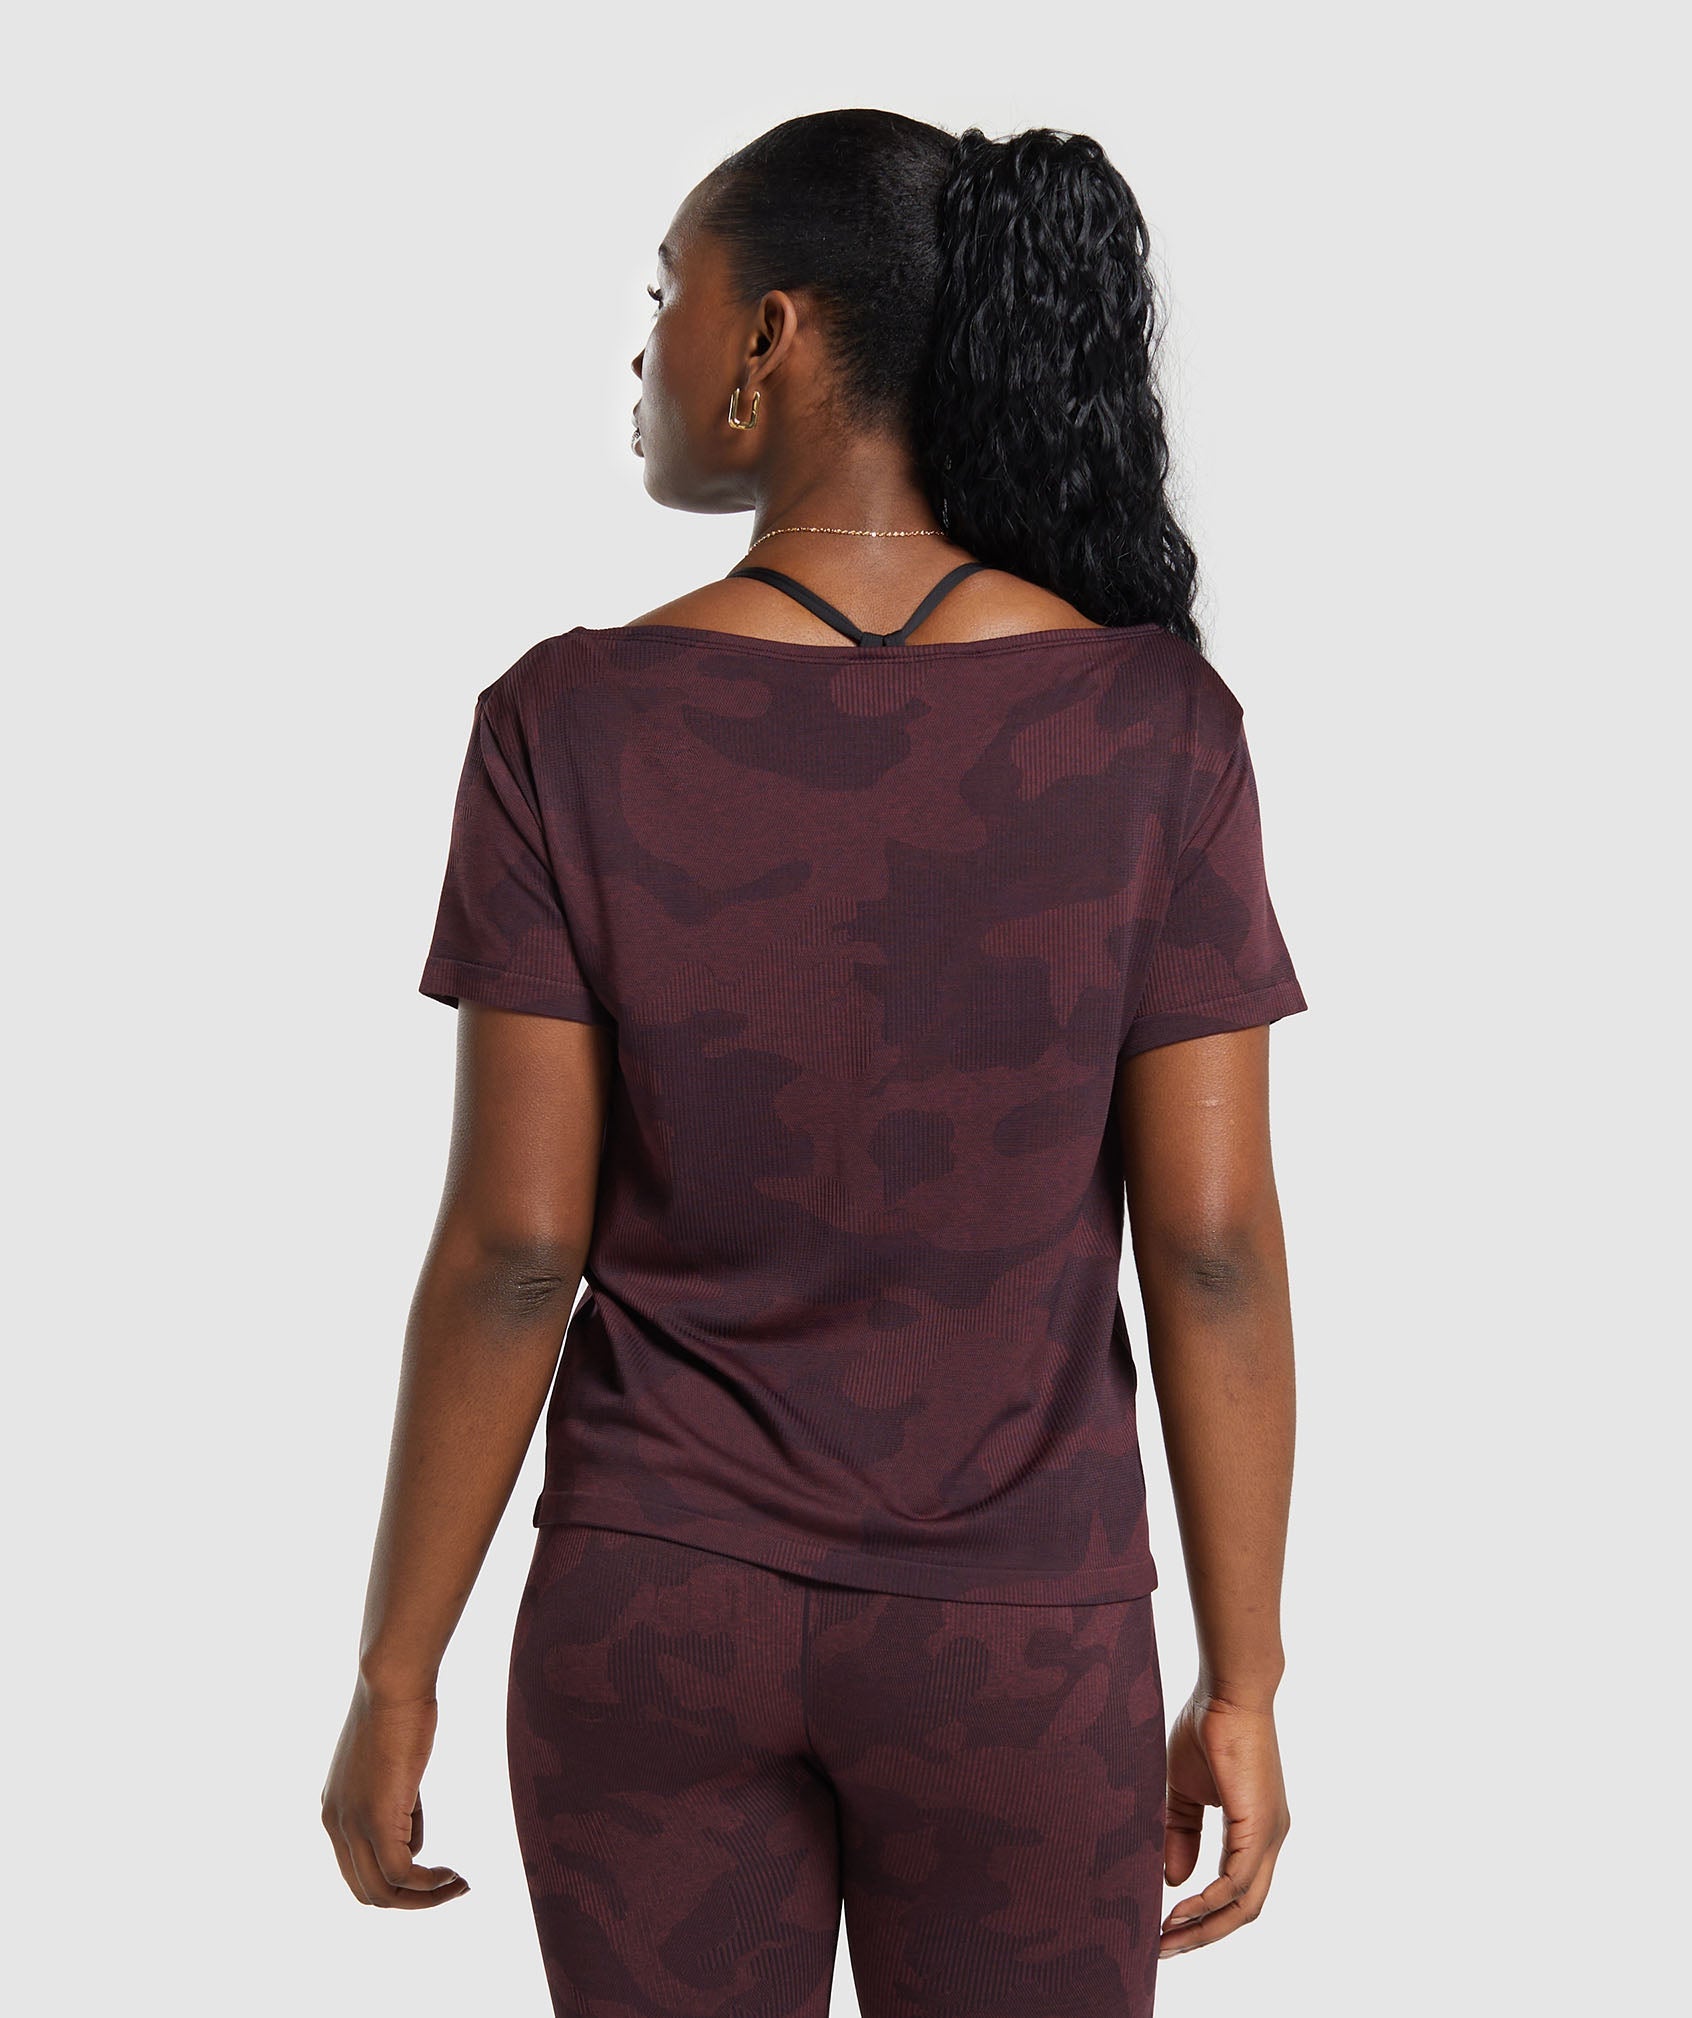 Adapt Camo Seamless T-Shirt in Plum Brown/Burgundy Brown - view 2